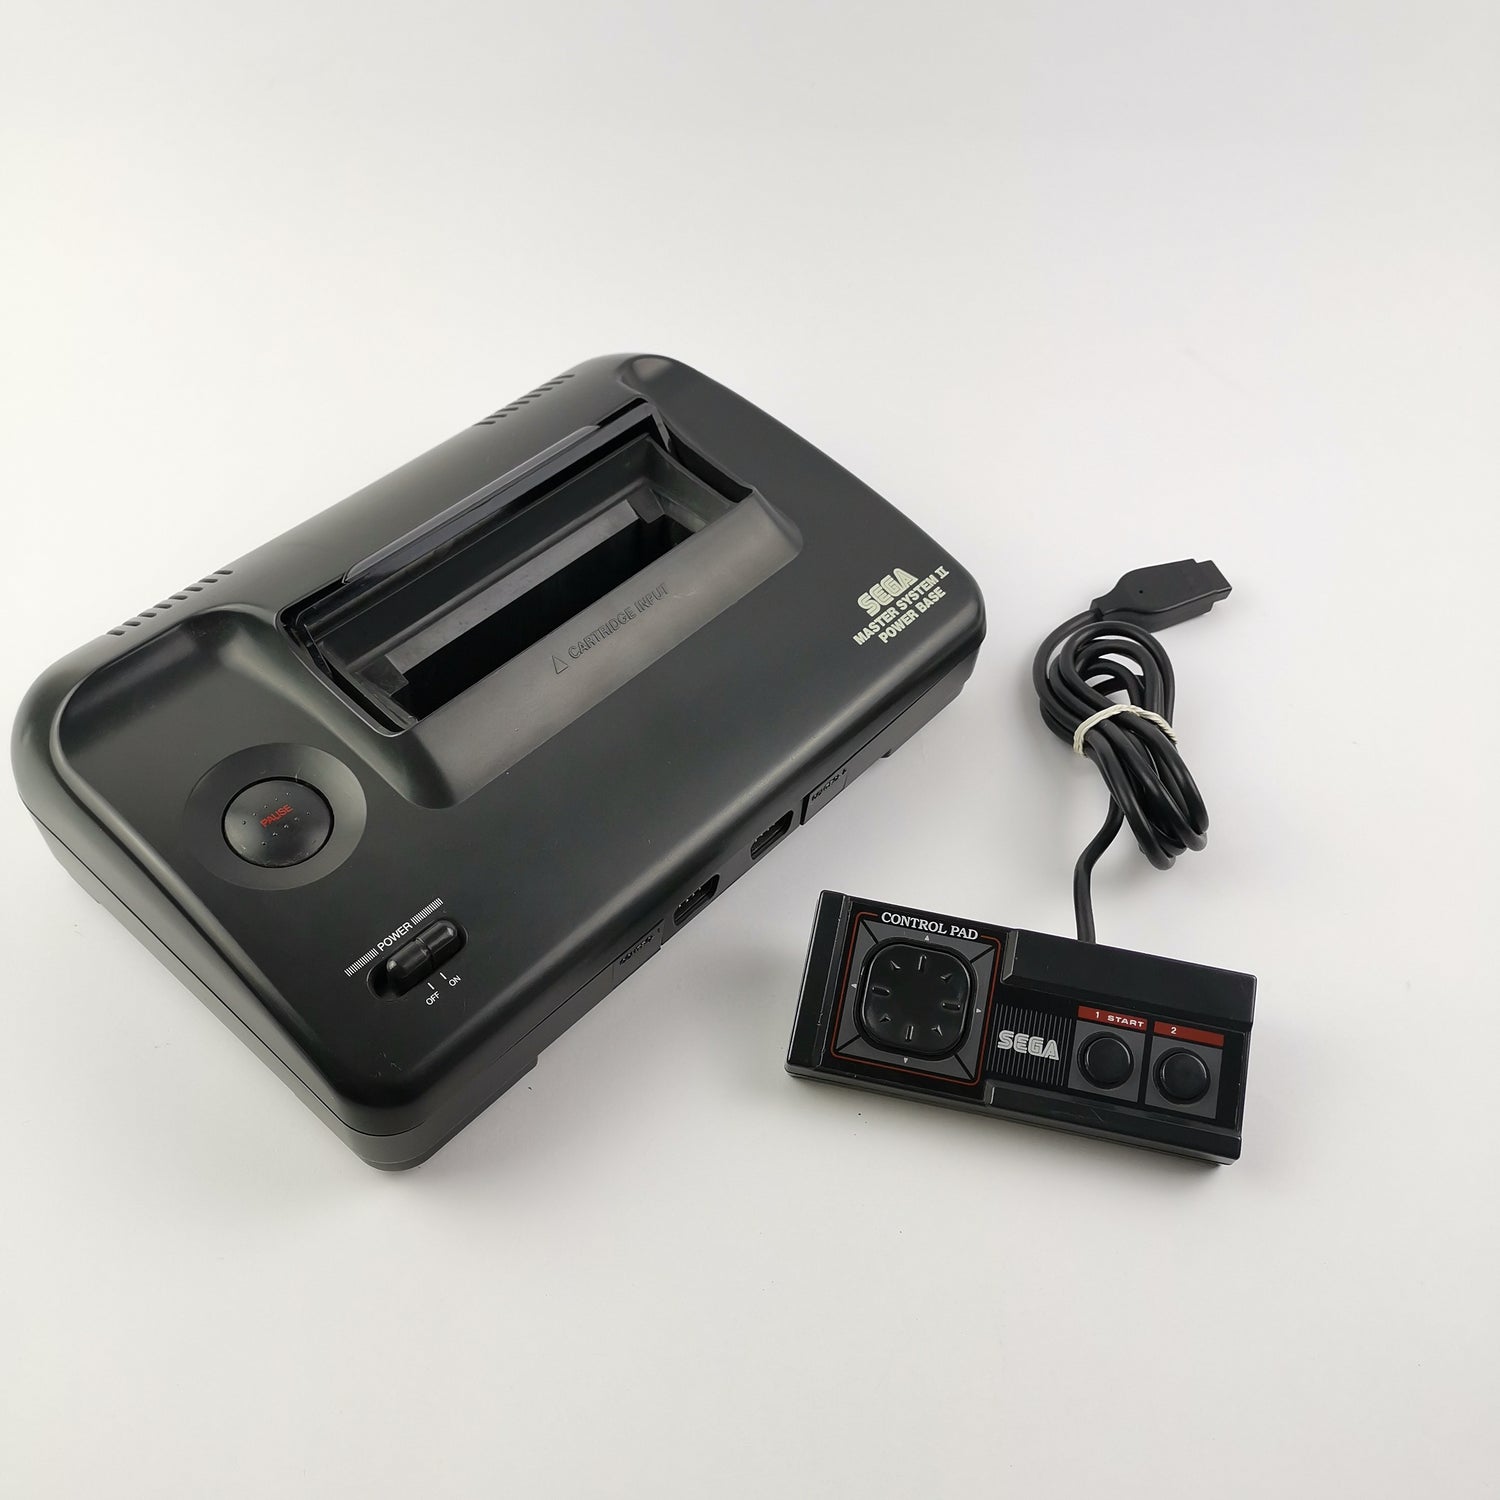 Sega Master System II Konsole mit Controller - Ersatzkonsole Console ohne Kabel